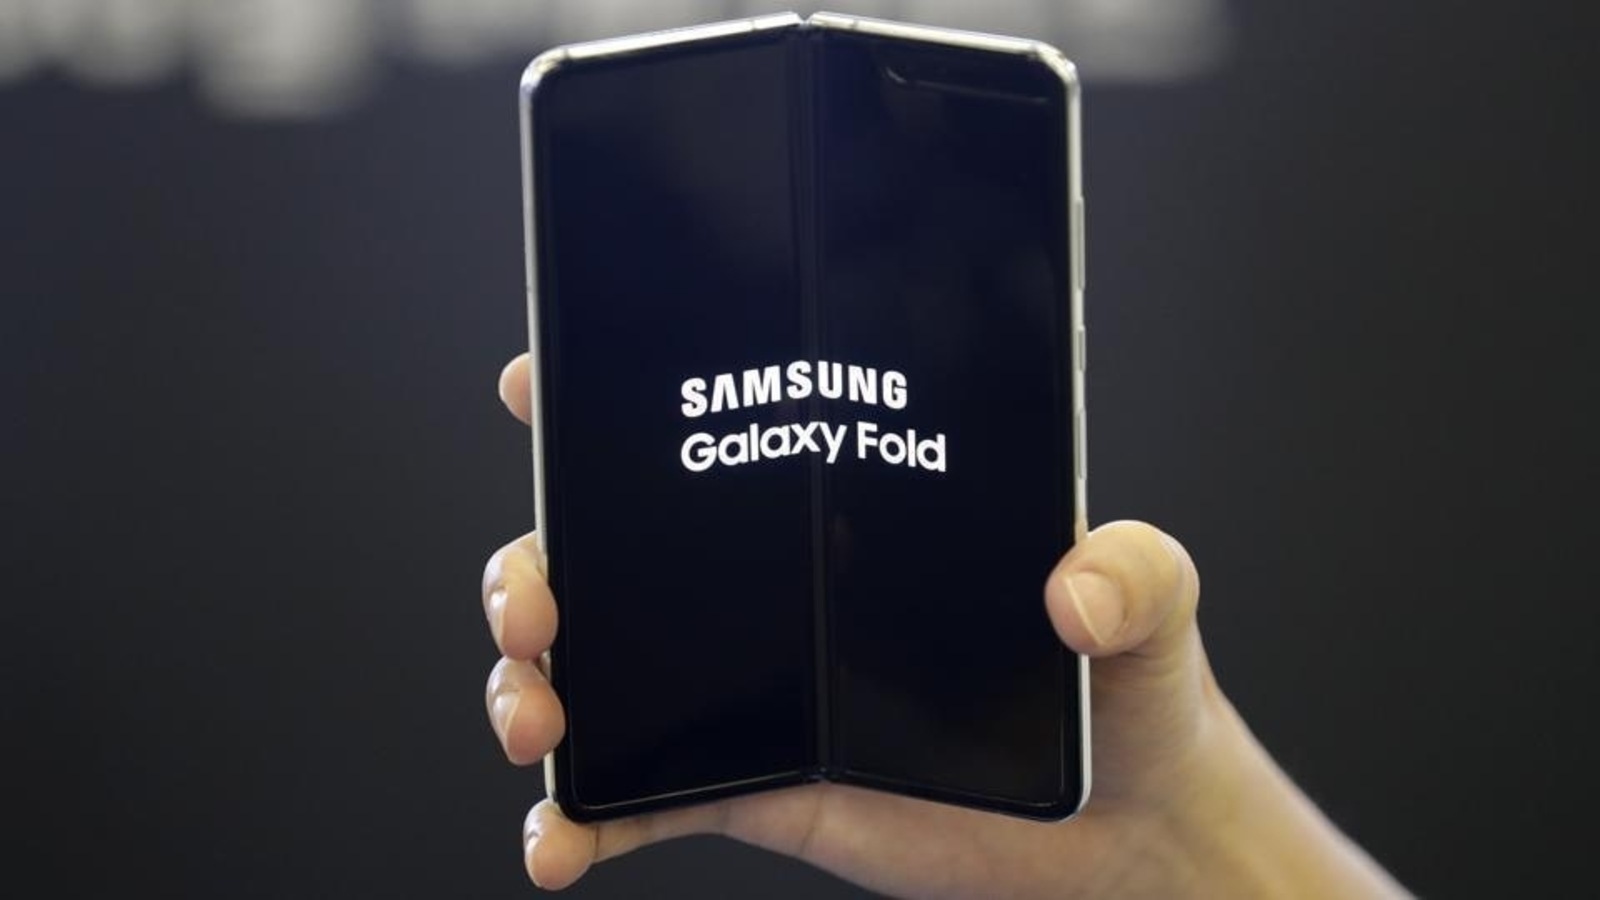 Samsung Galaxy Z Fold 3, Z Flip 3 Pre-Booking in India: HDFC Users Get  Advantage - News18